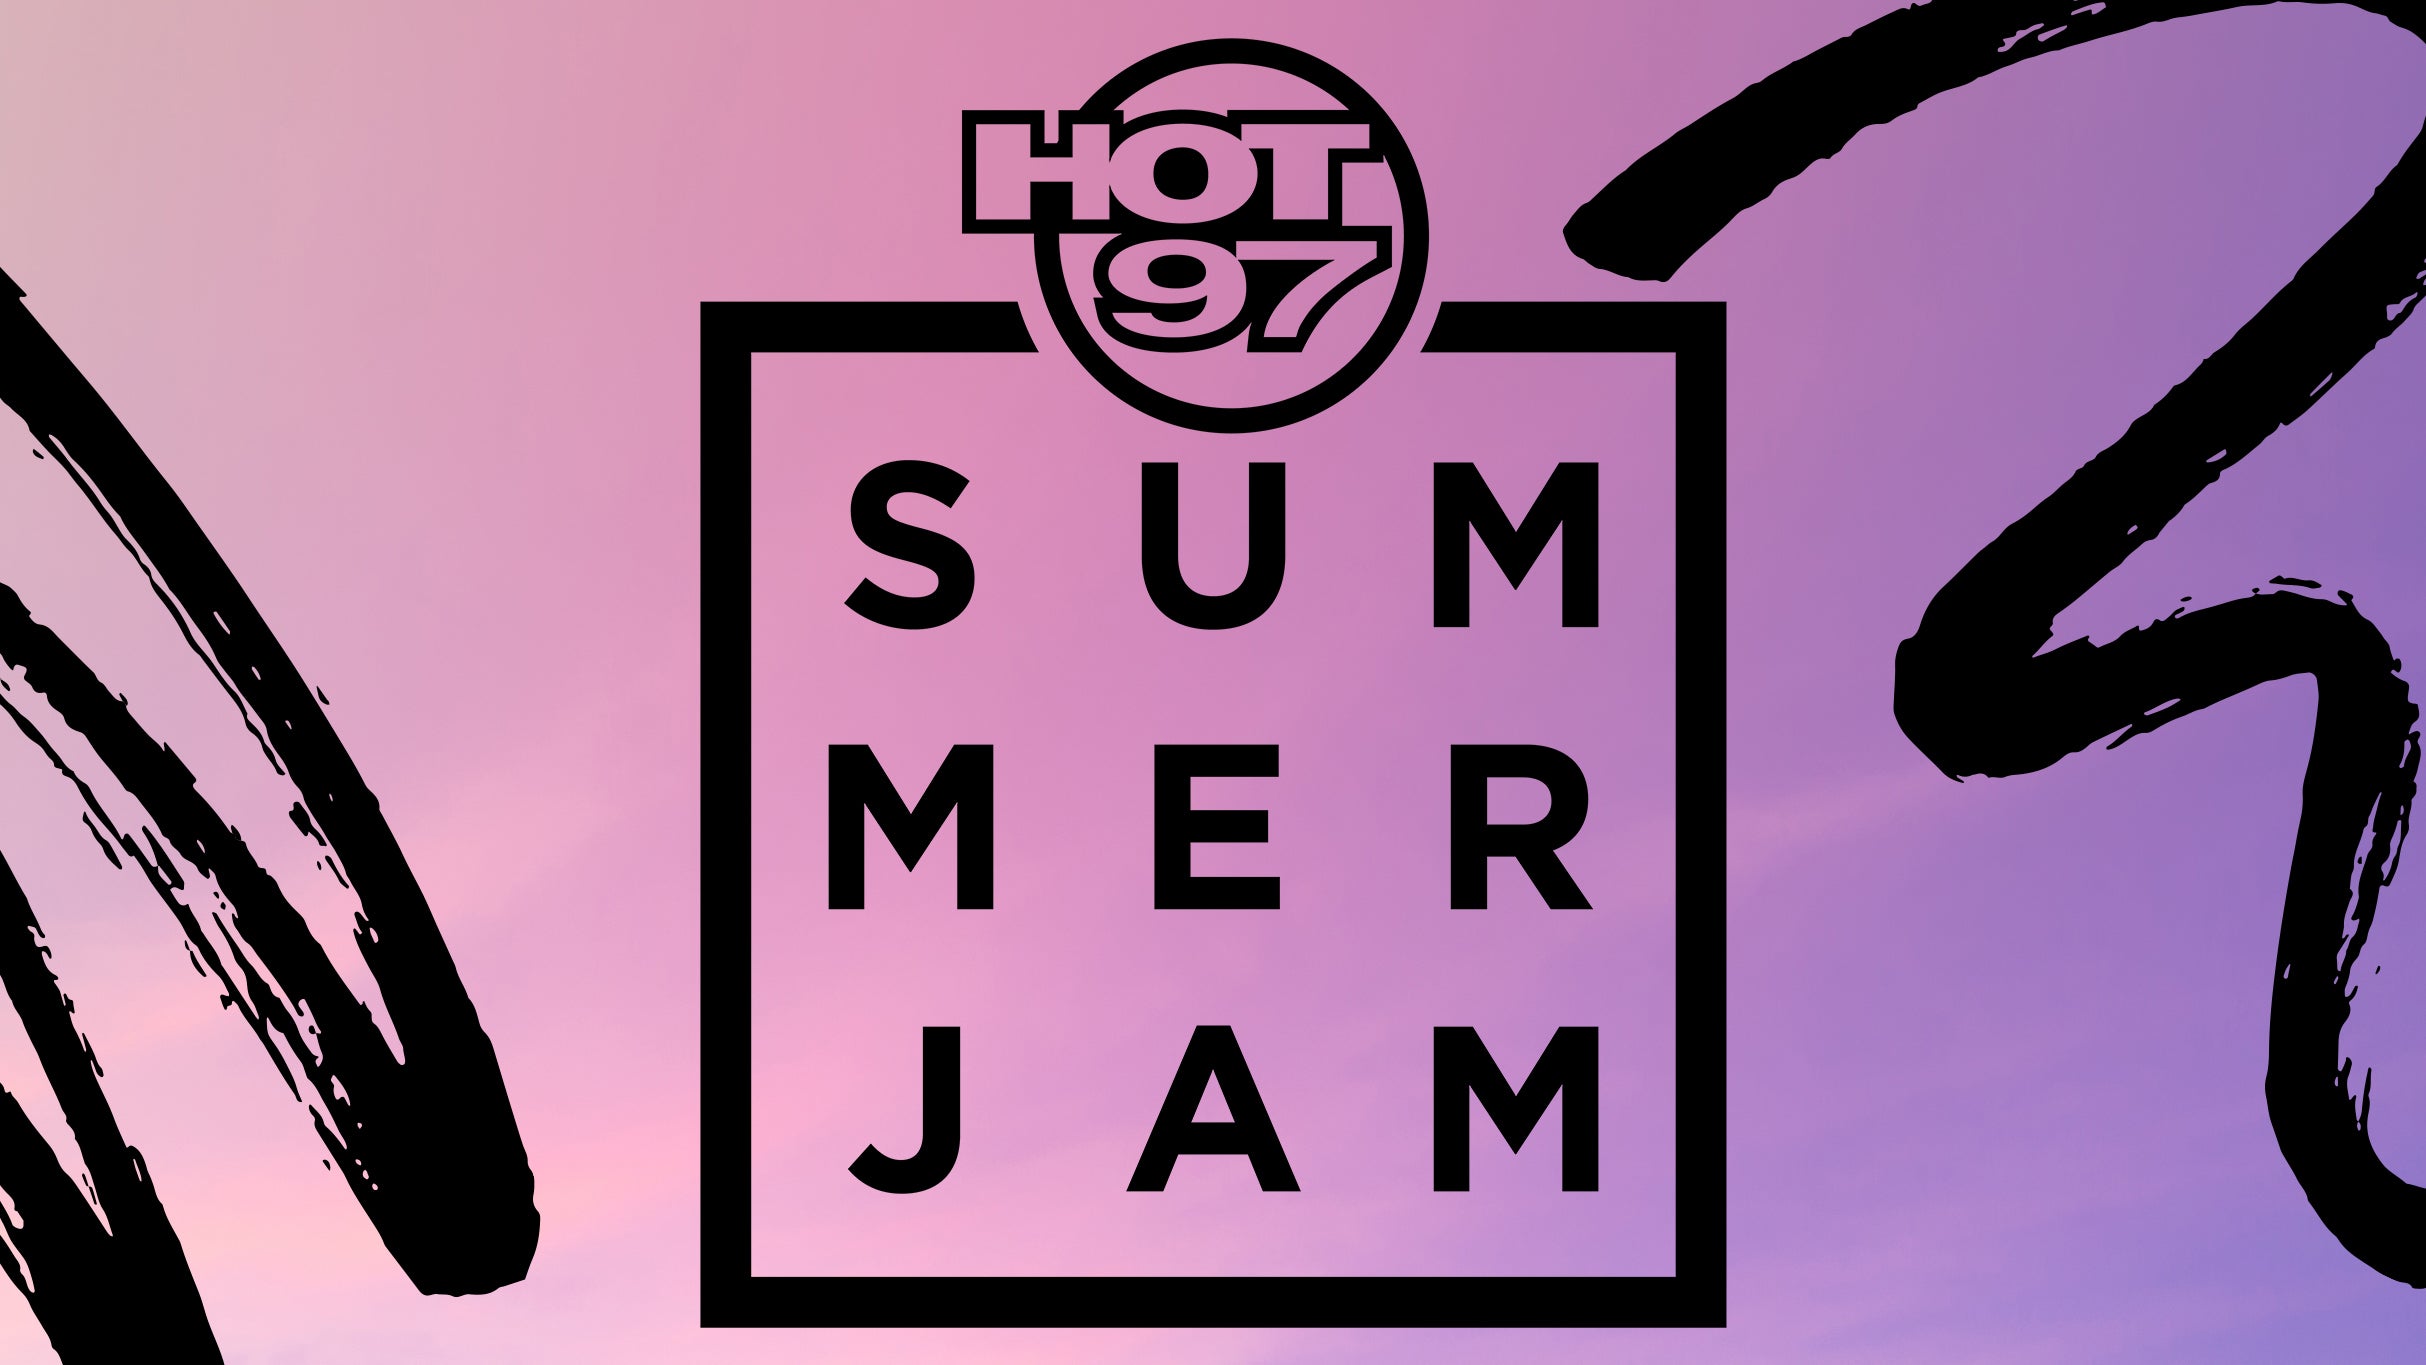 HOT 97 Summer Jam in Belmont Park - Long Island promo photo for Official Platinum presale offer code